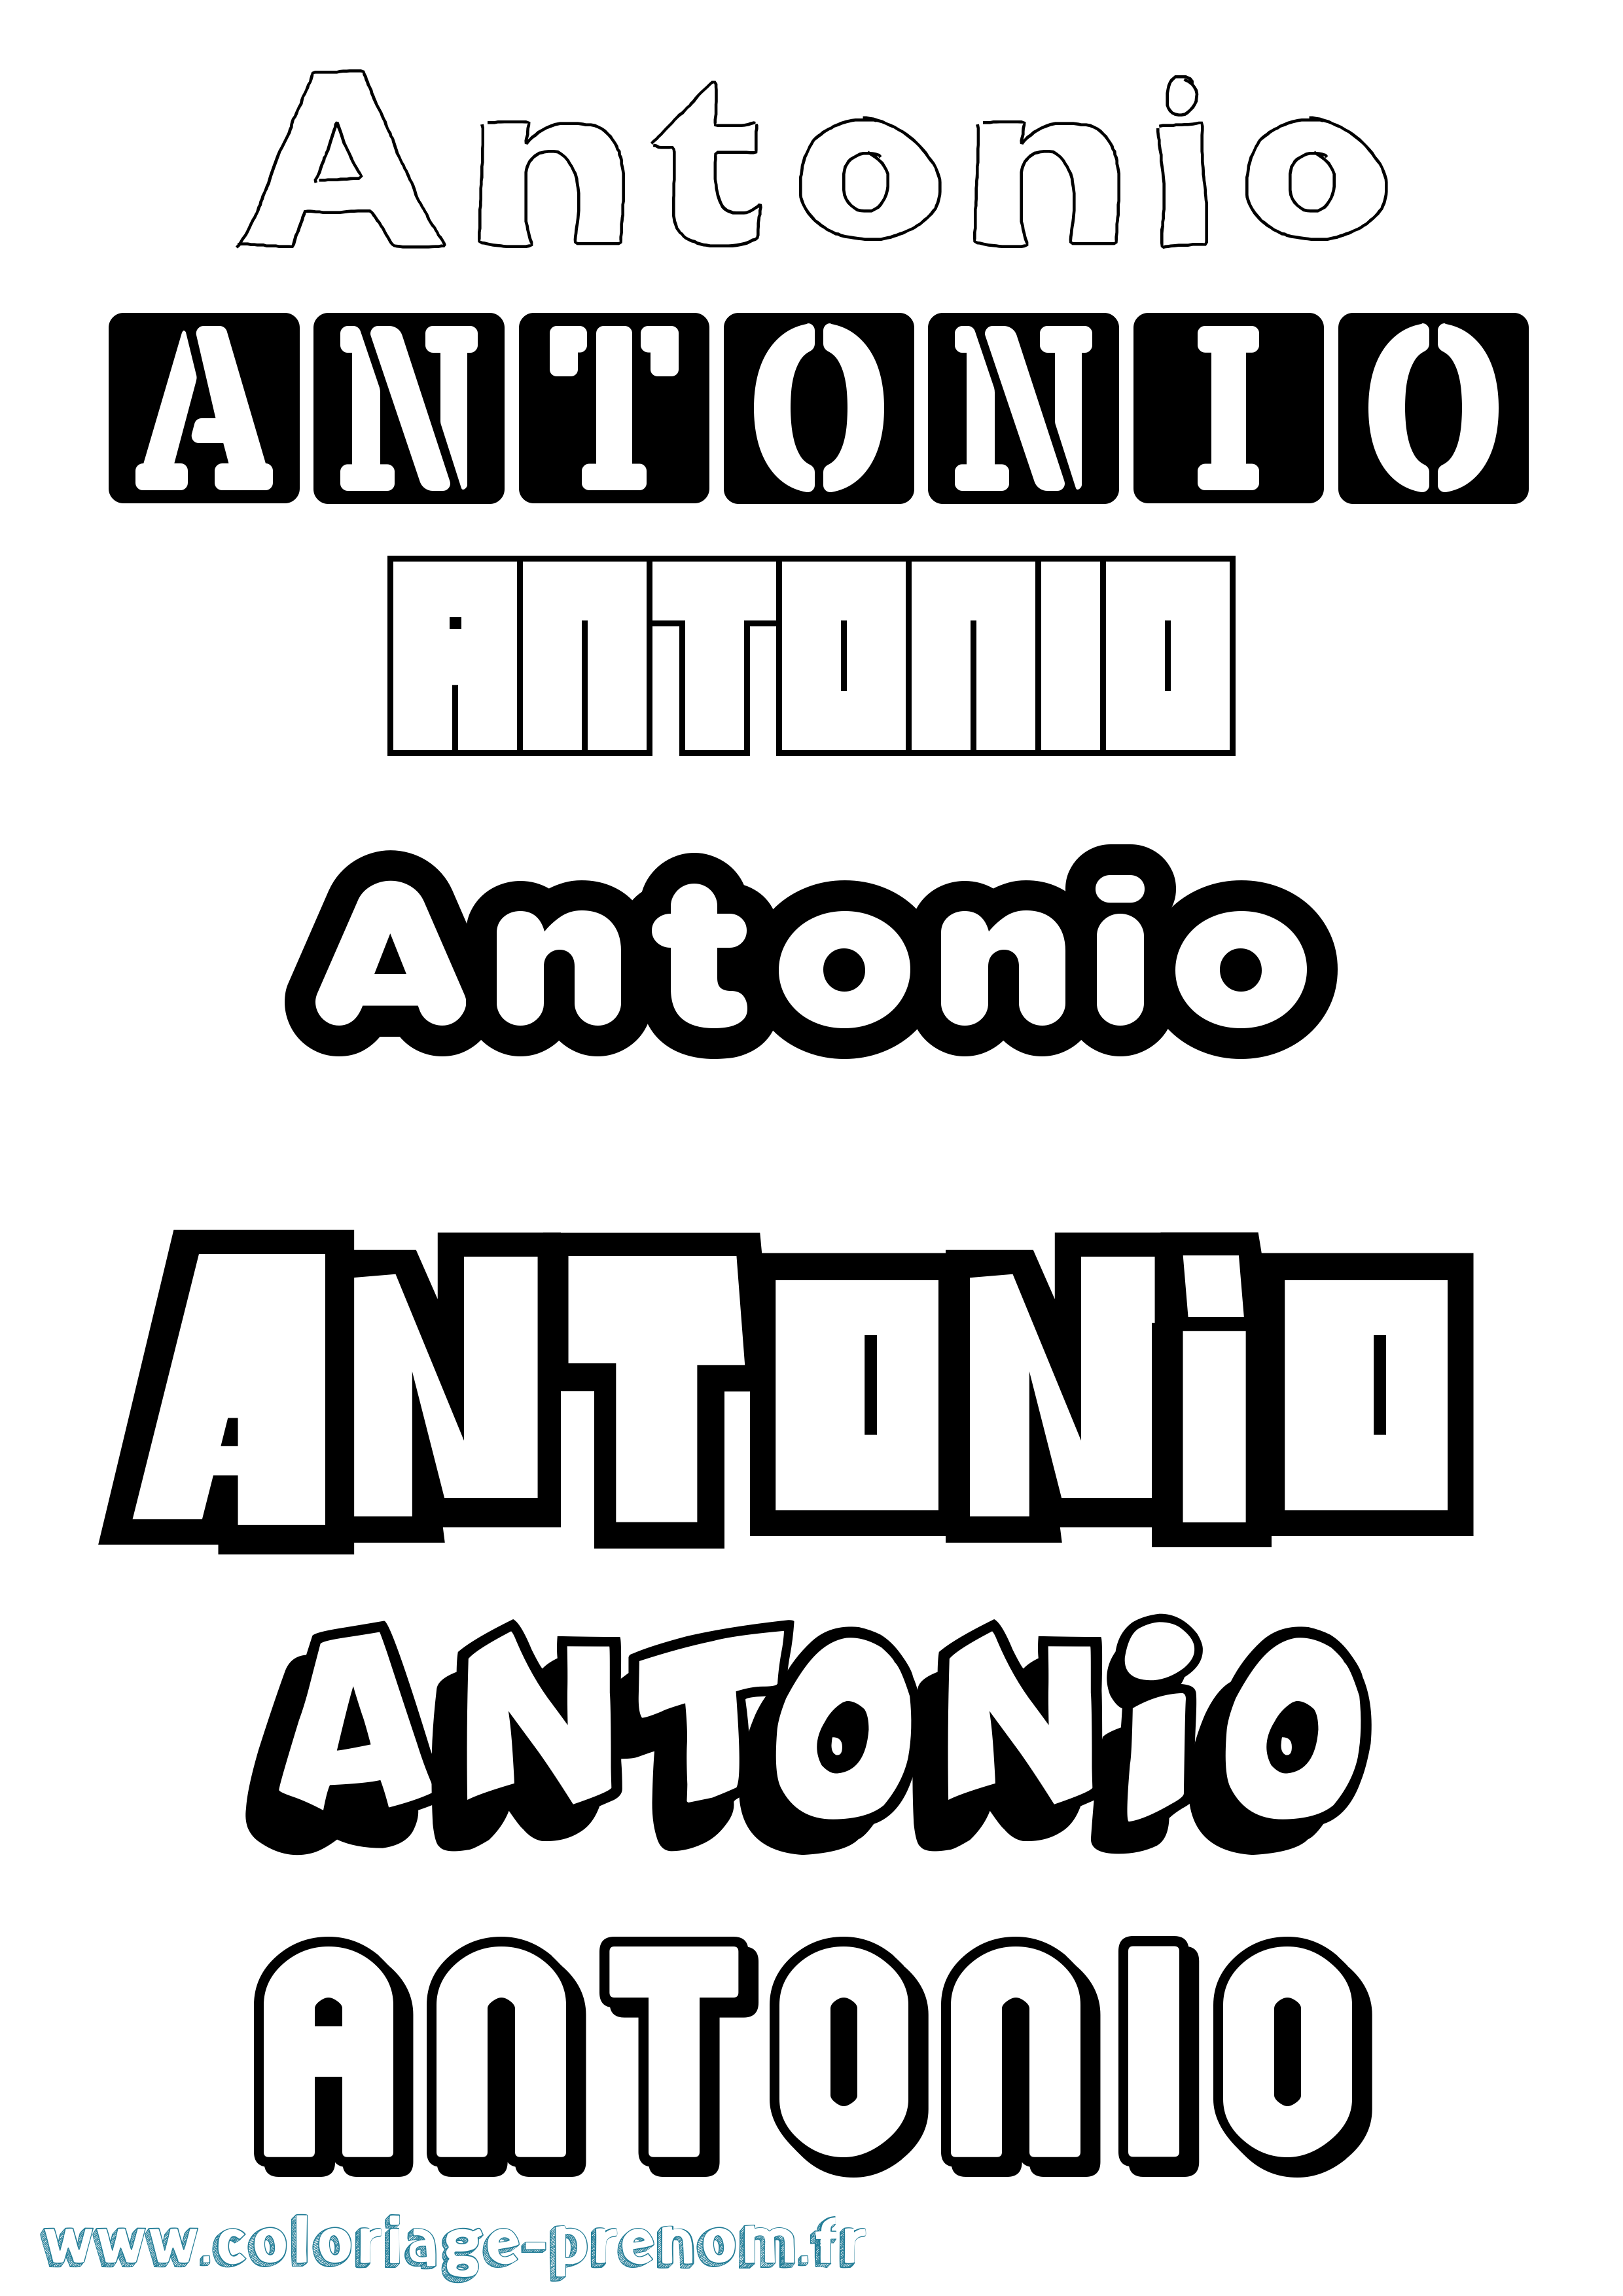 Coloriage prénom Antonio